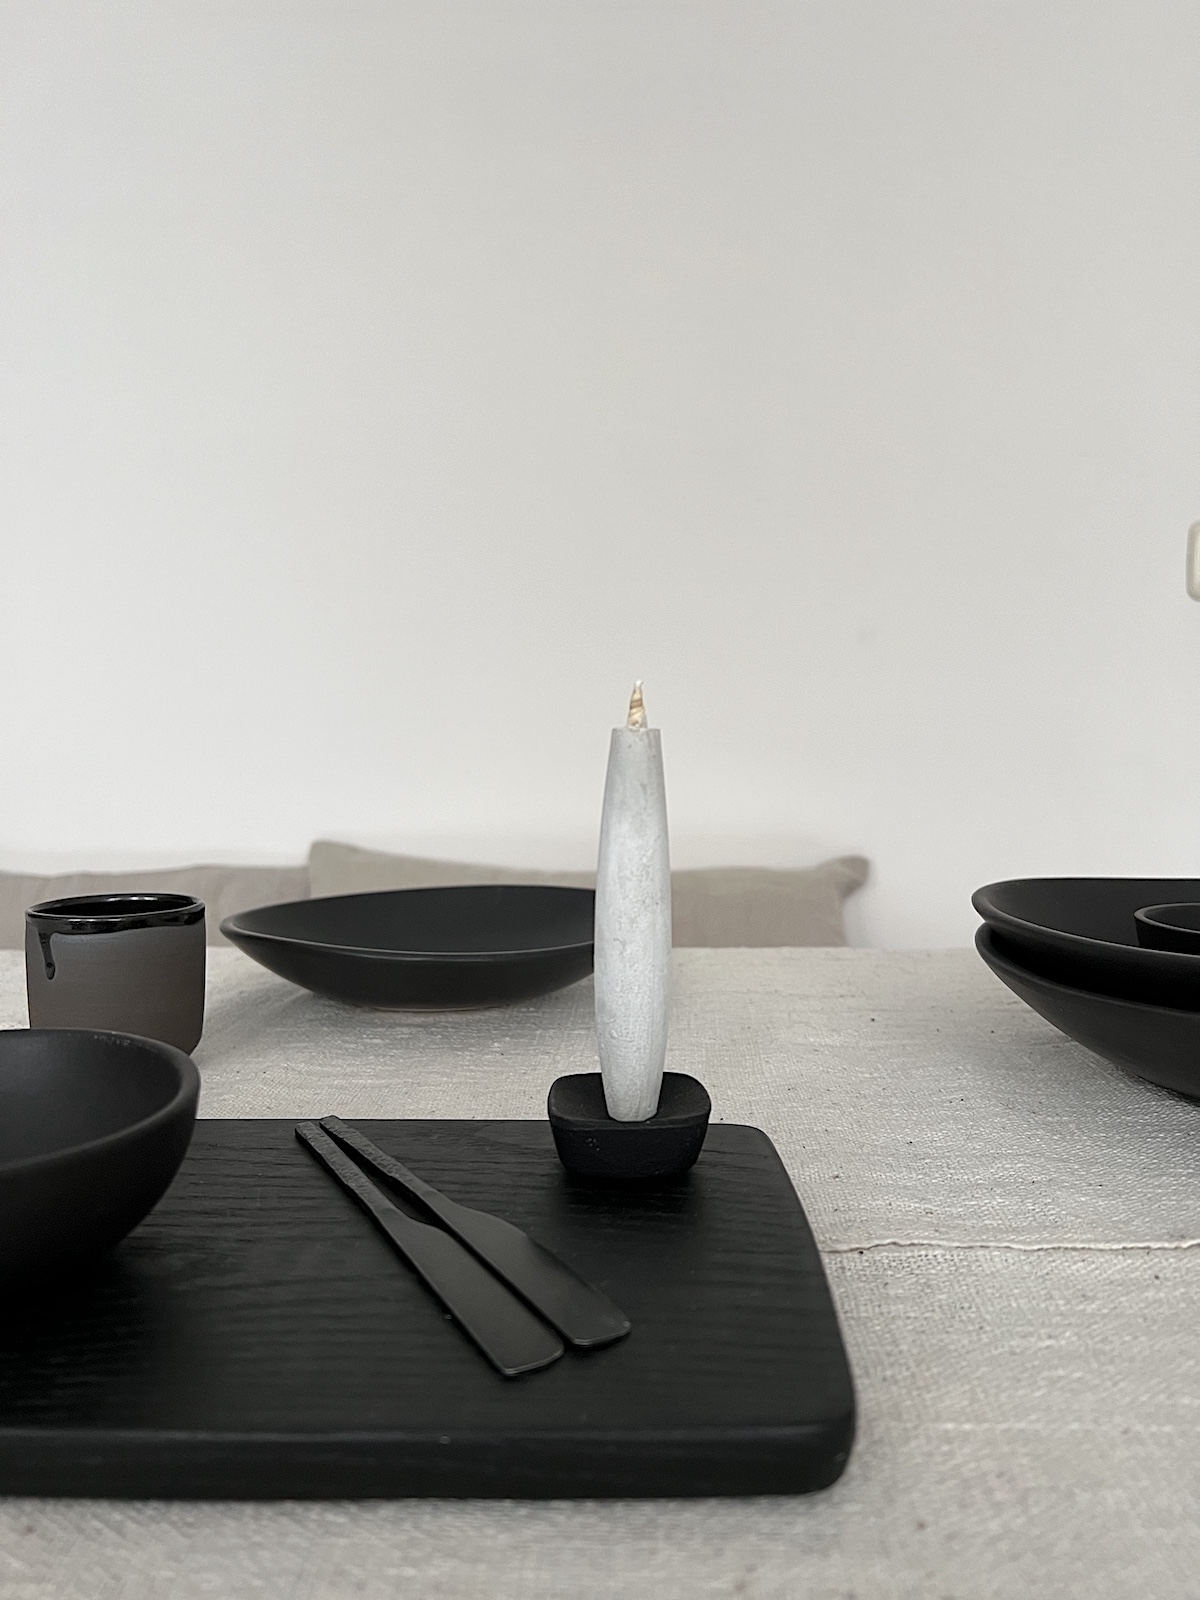 Table setting with black Stoneware | shop update - vosgesparis